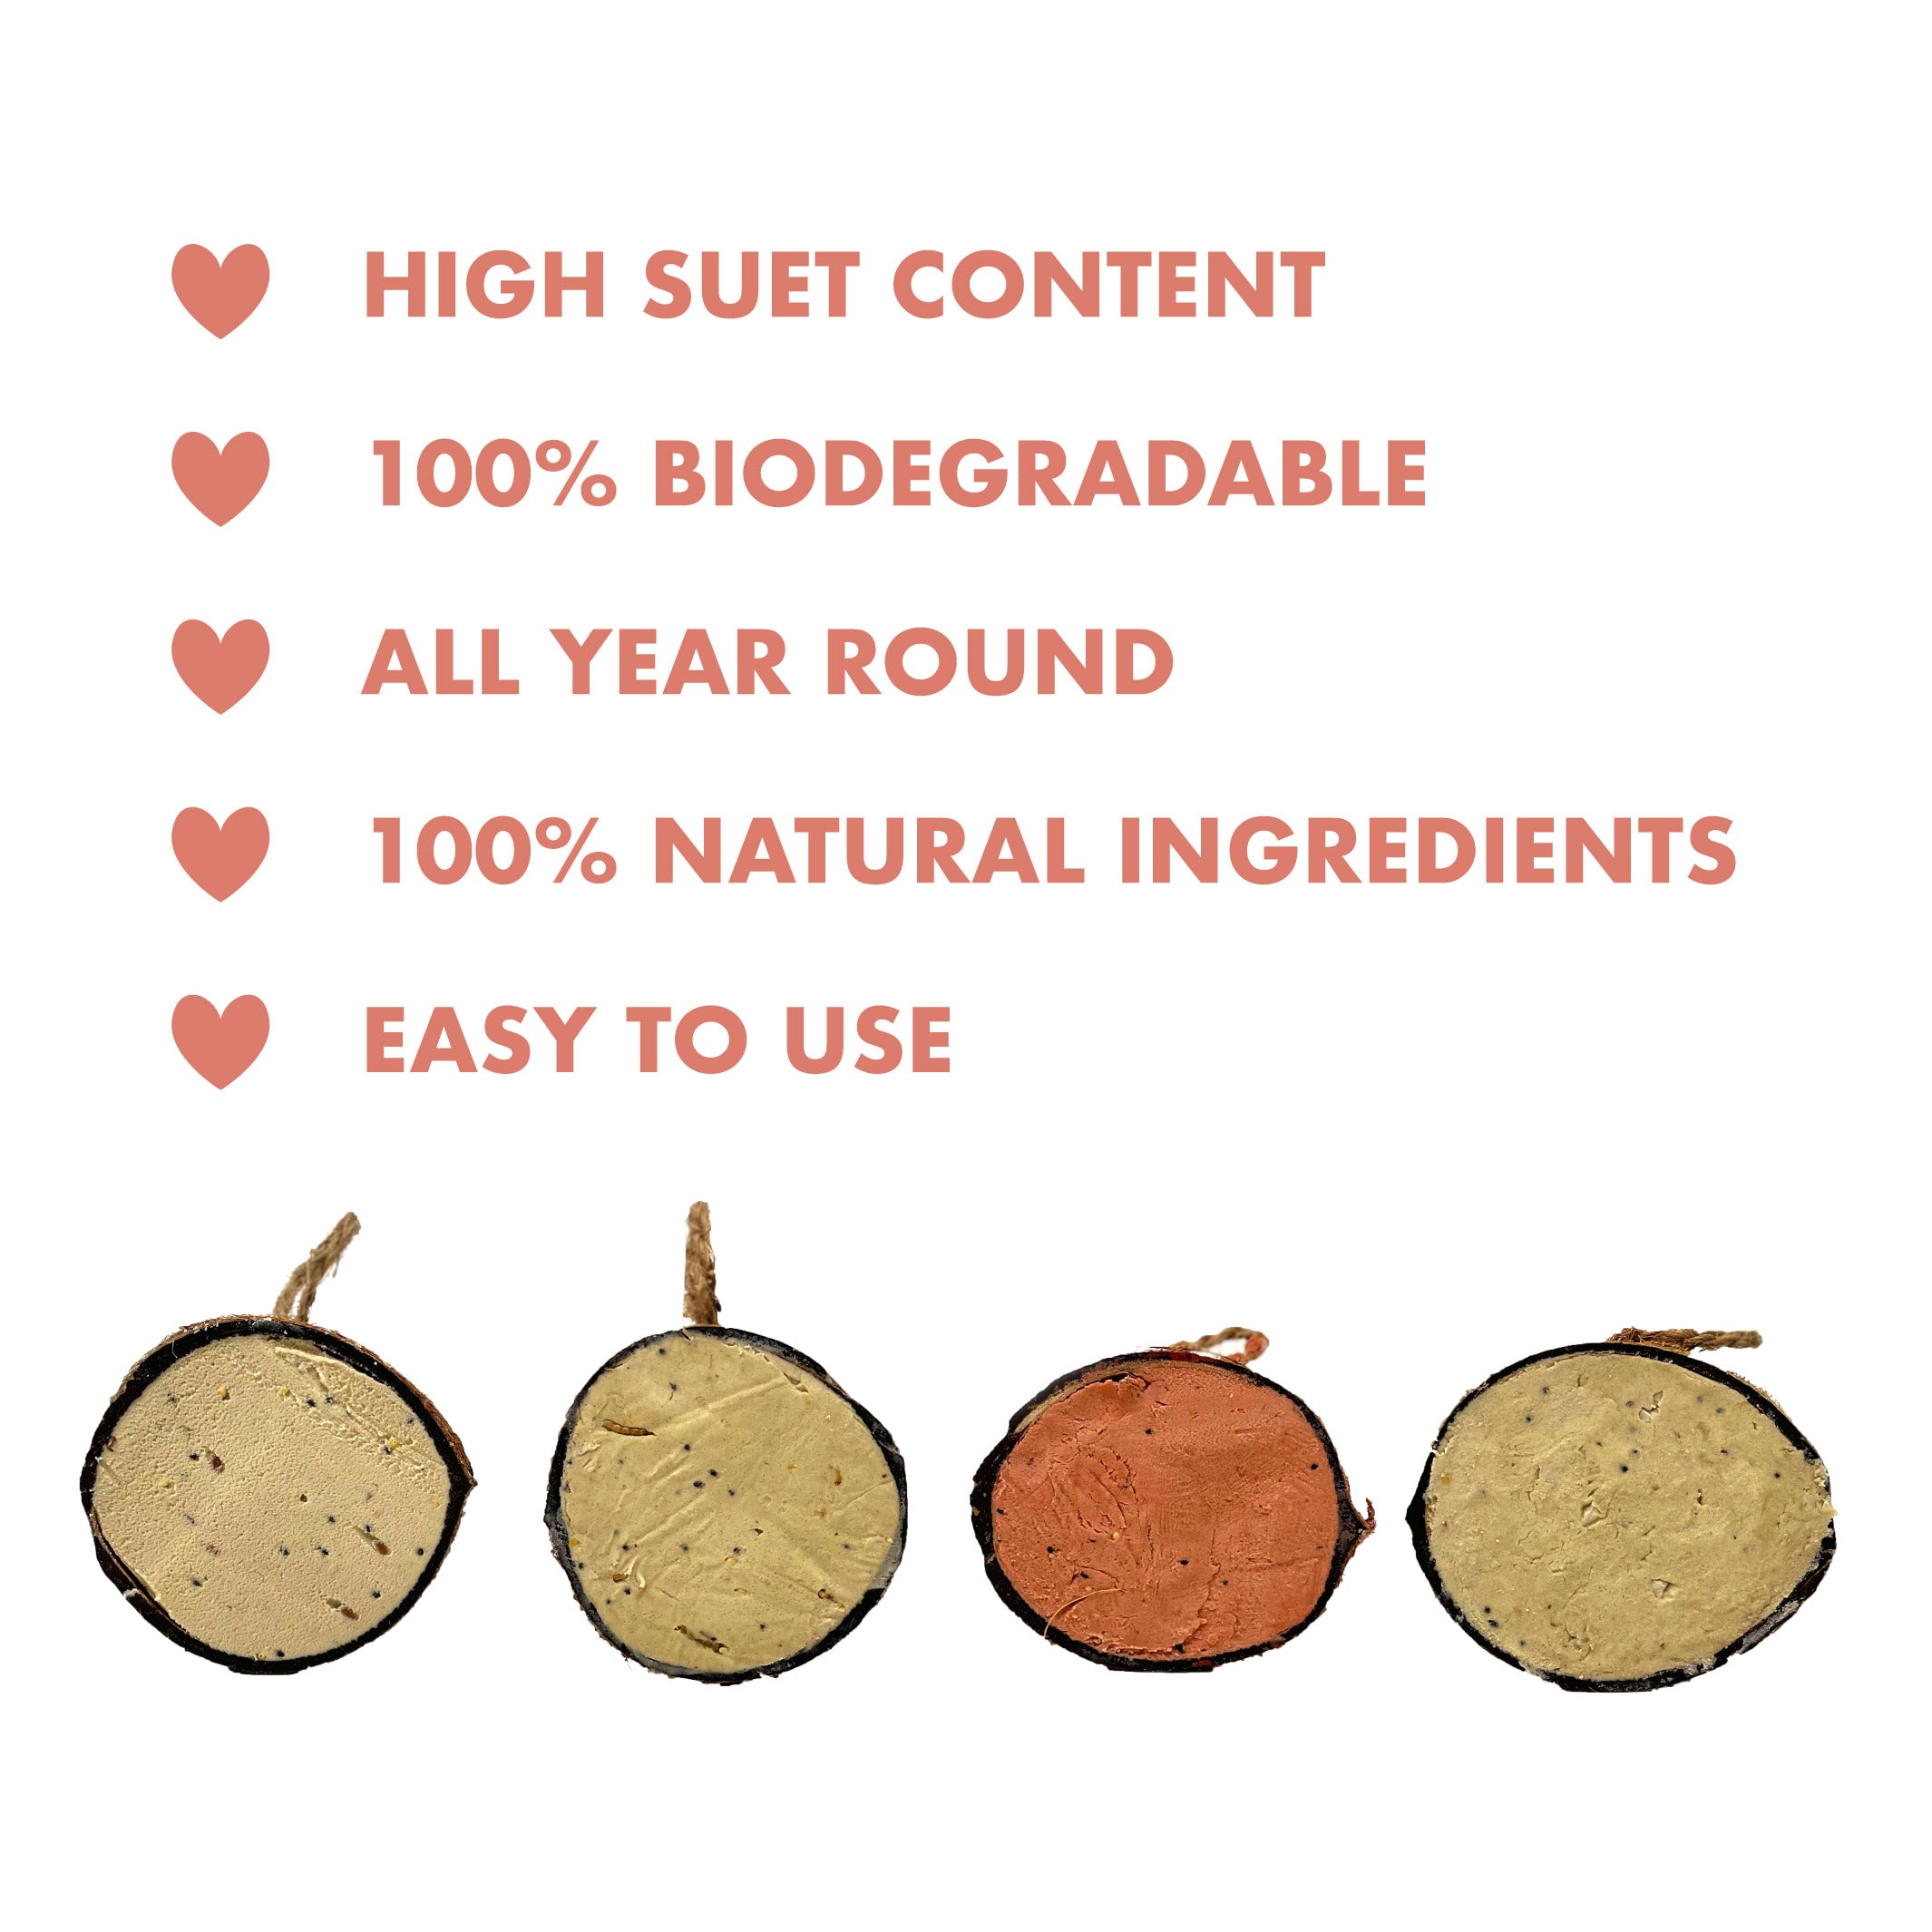 benefits of feeding suet coconuts